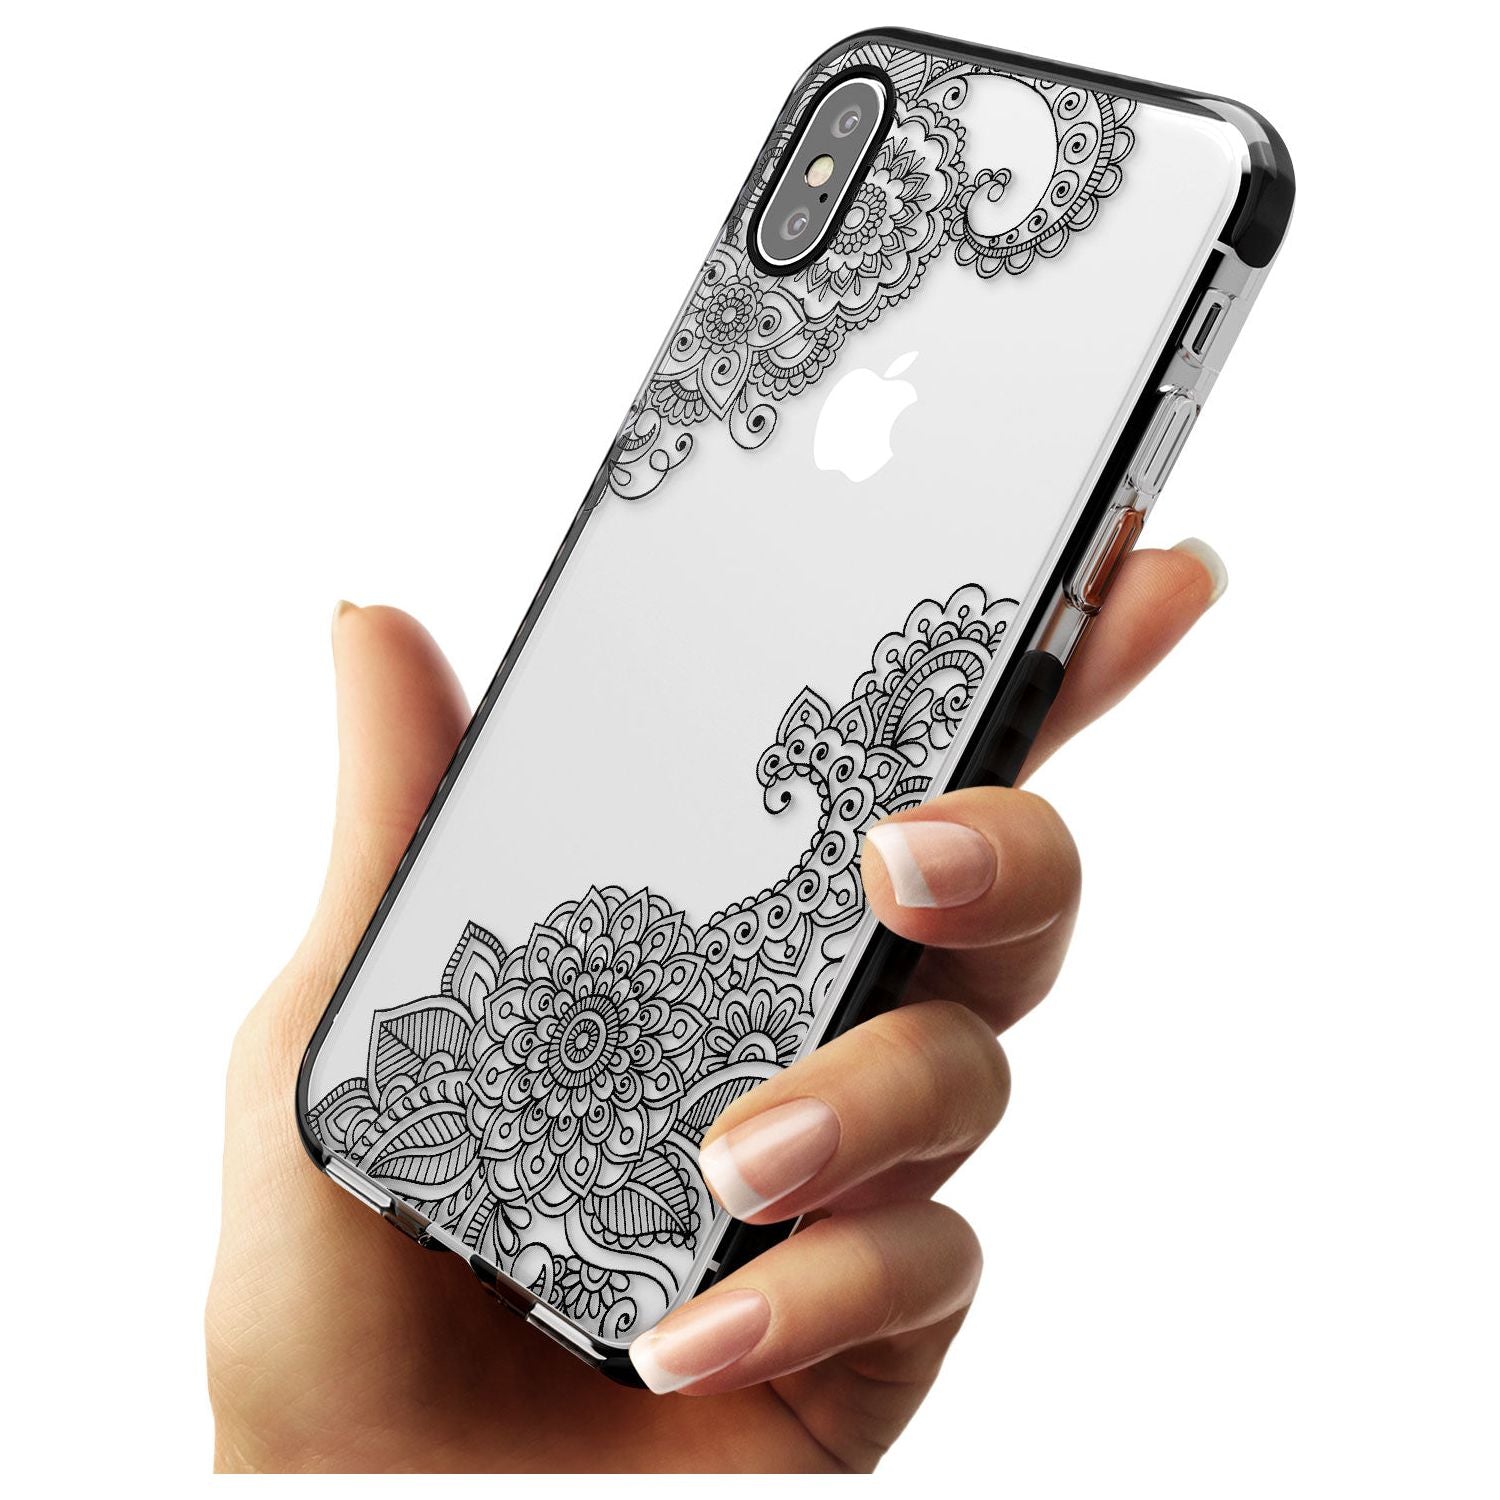 Black Henna Botanicals Black Impact Phone Case for iPhone X XS Max XR